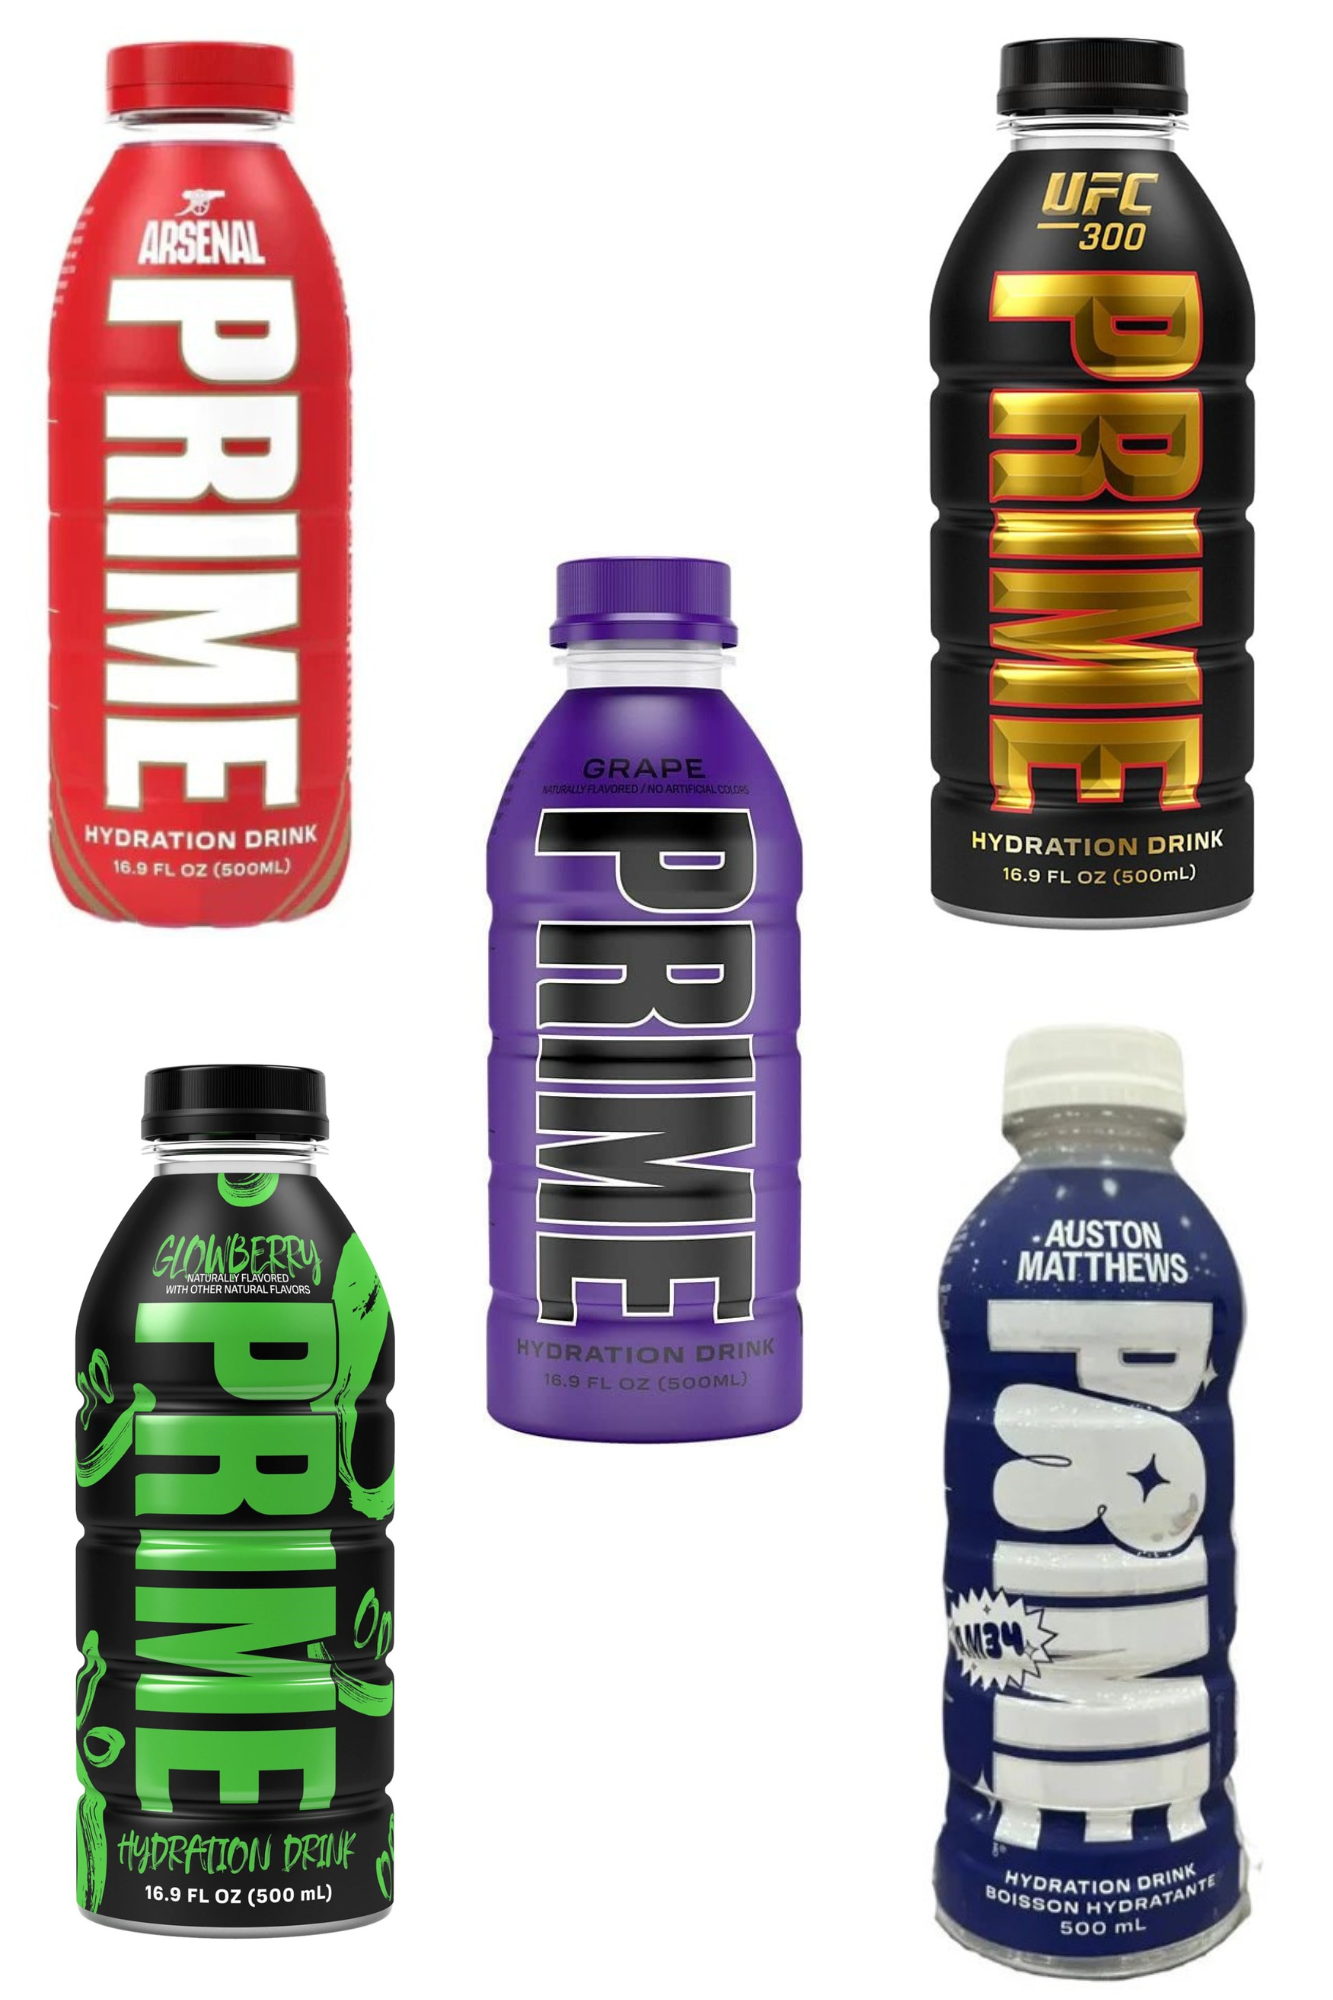 Prime Hydration Arsenal Football Club Bottle x UFC x Grape x Glowberry x Auston Matthews